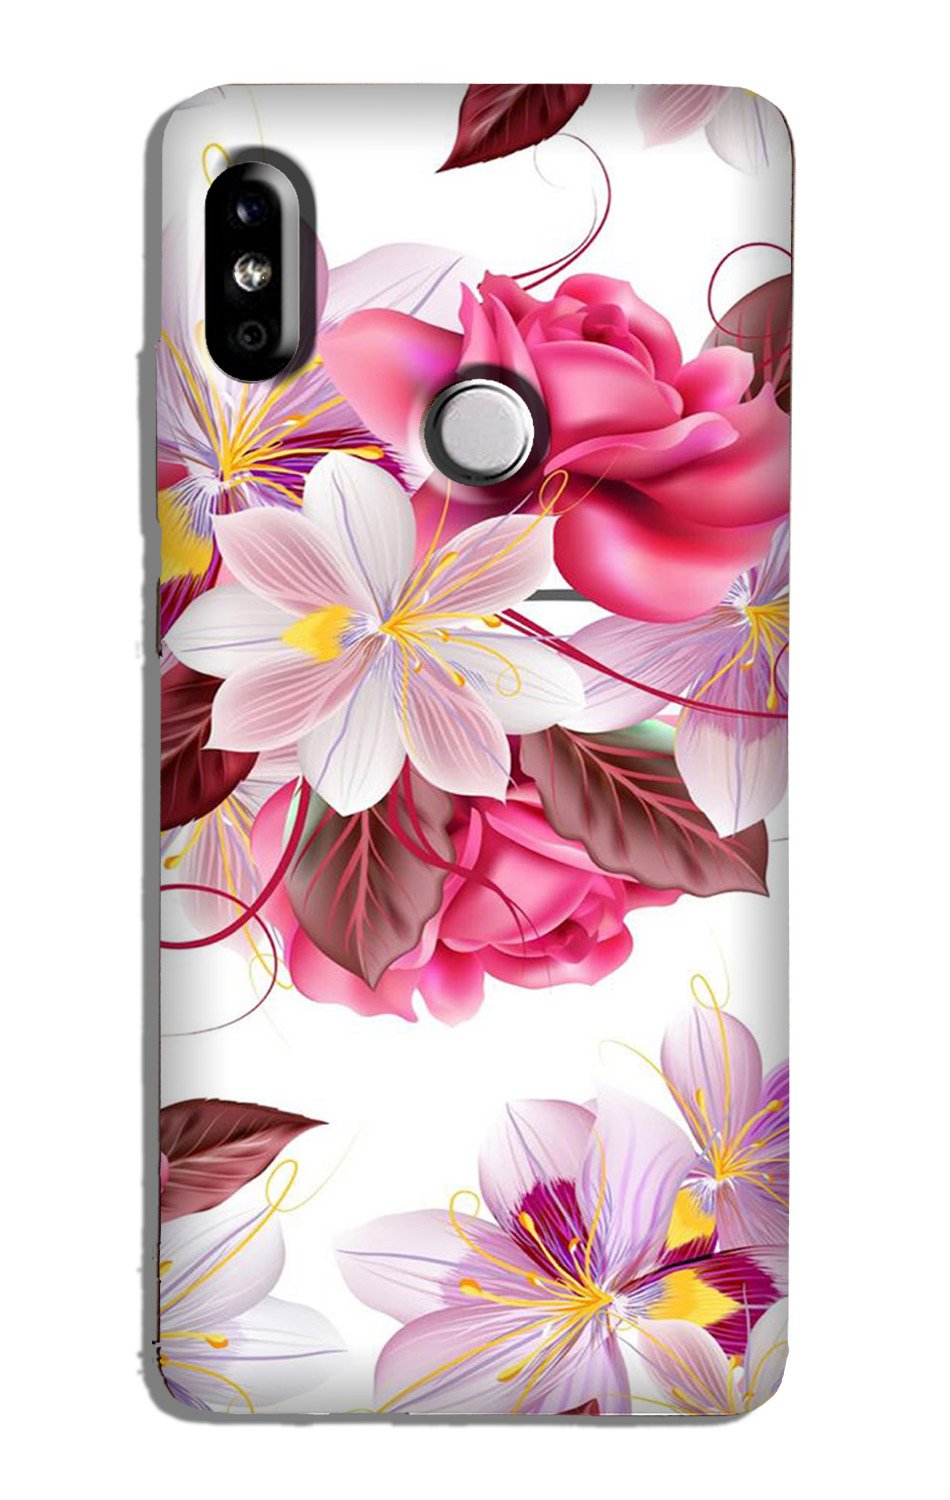 Beautiful flowers Case for Xiaomi Redmi Y3